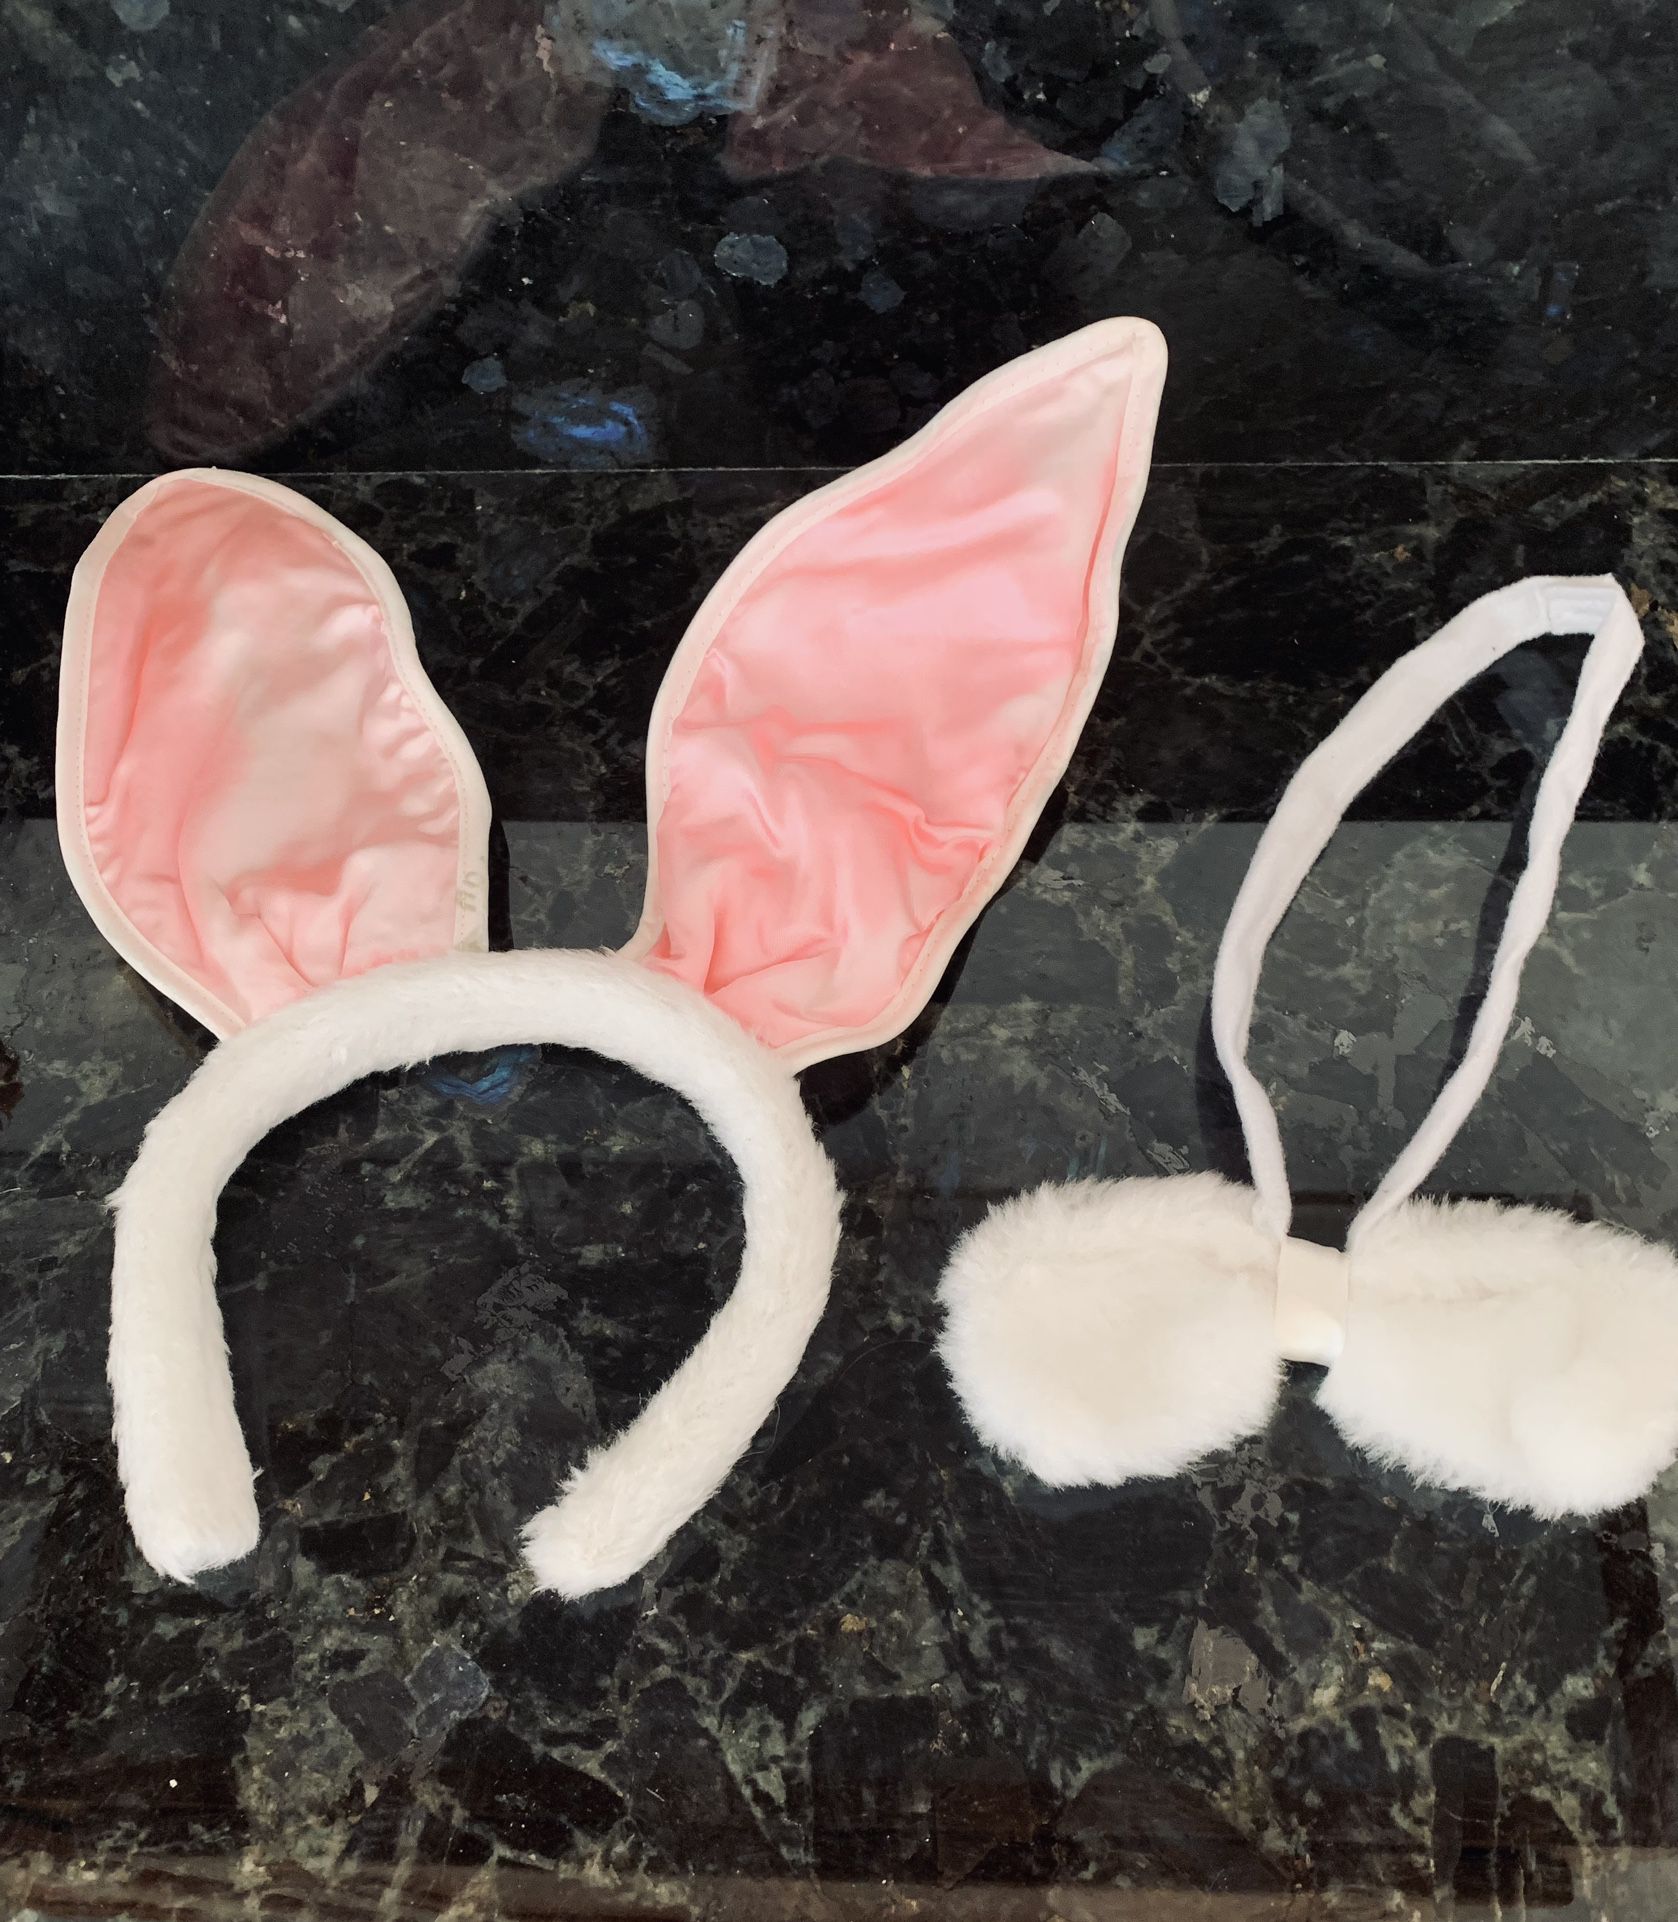 Kids Easter Bunny Ears & Velcro Bow Tie, Costume